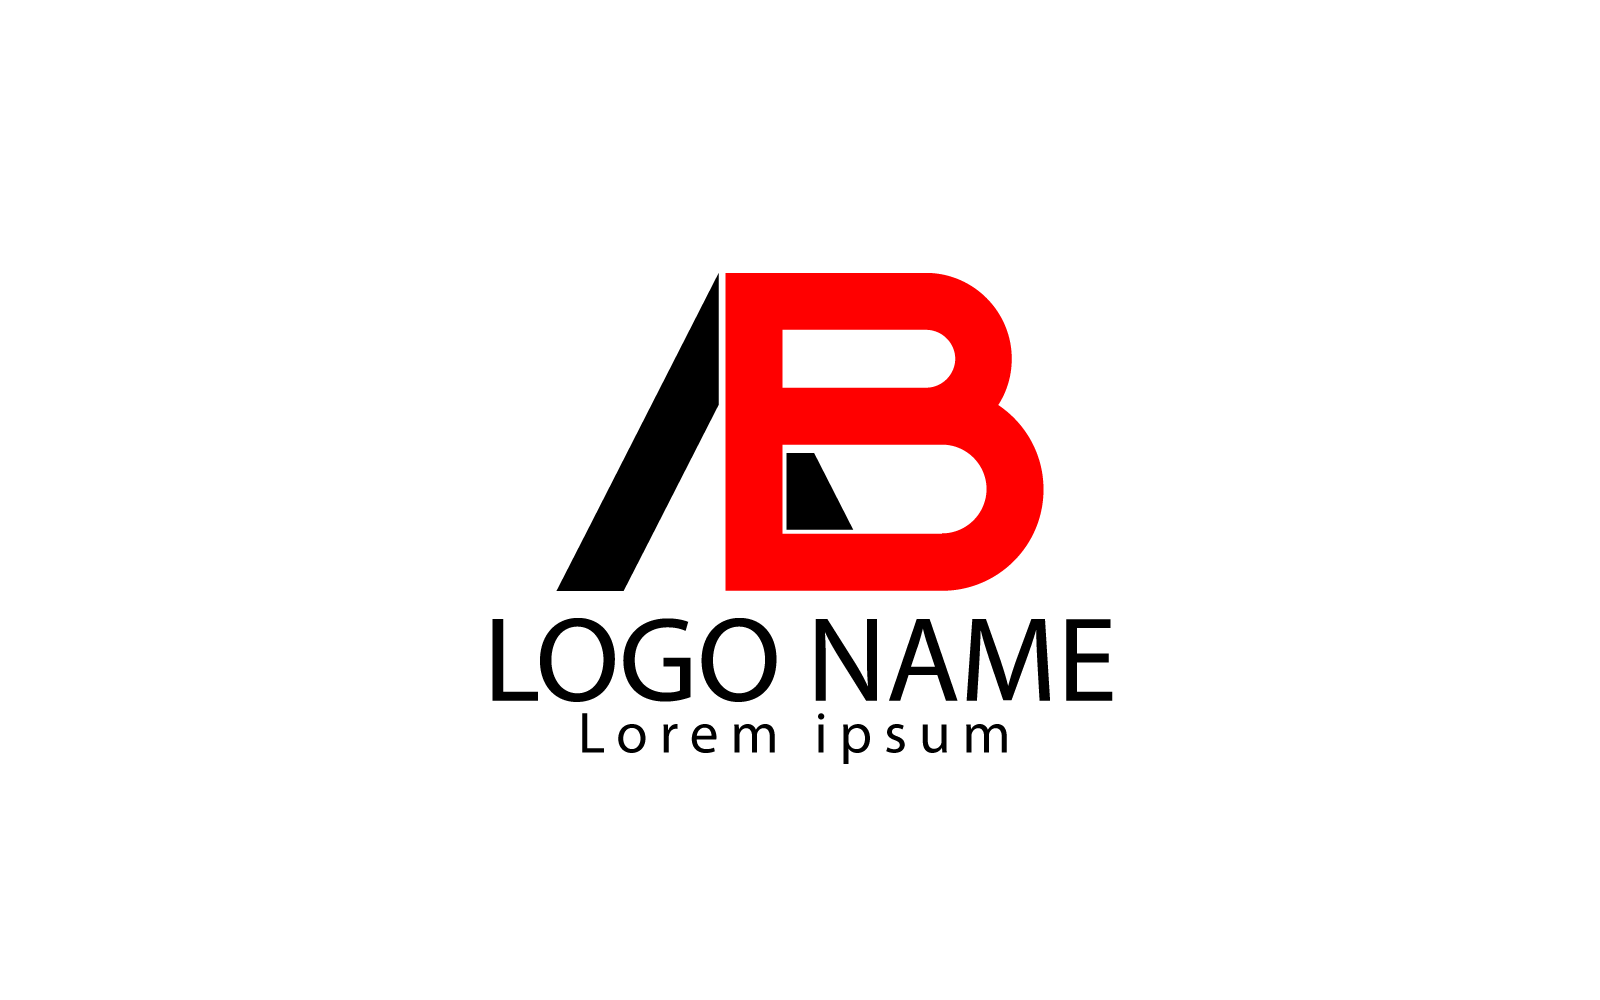 Logo AB creativo e semplice